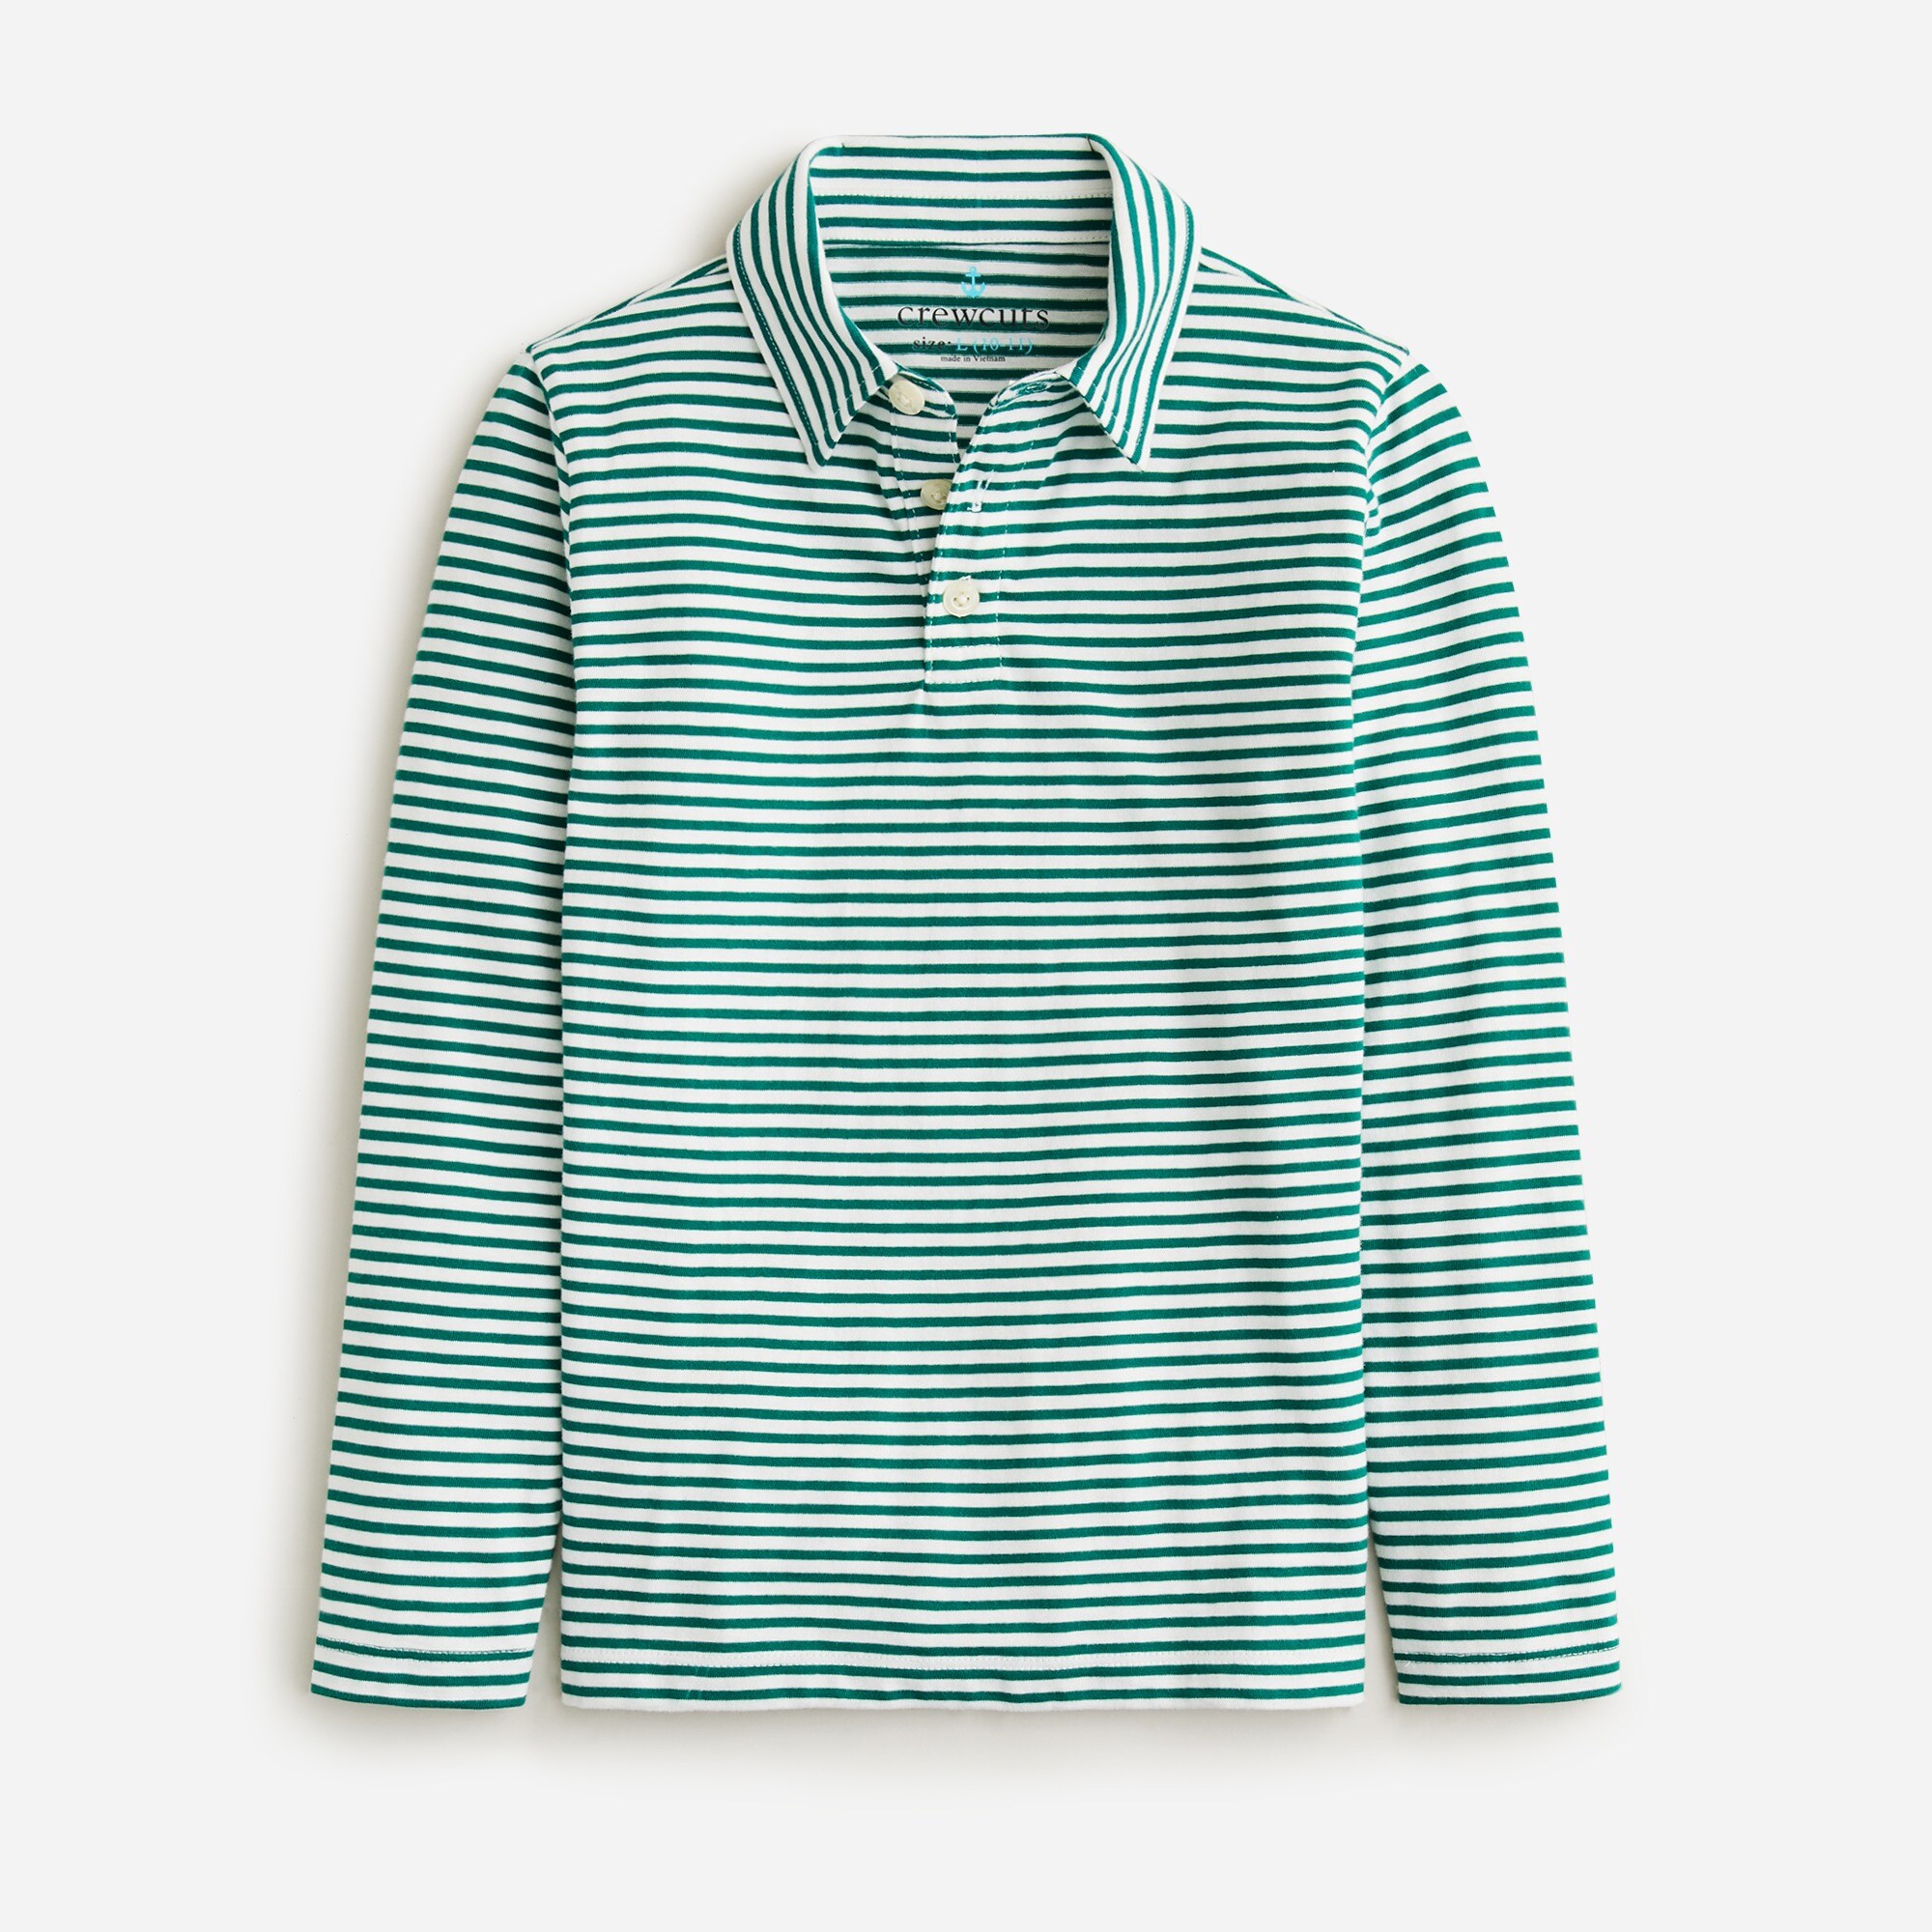  Kids' long-sleeve polo shirt in stripe